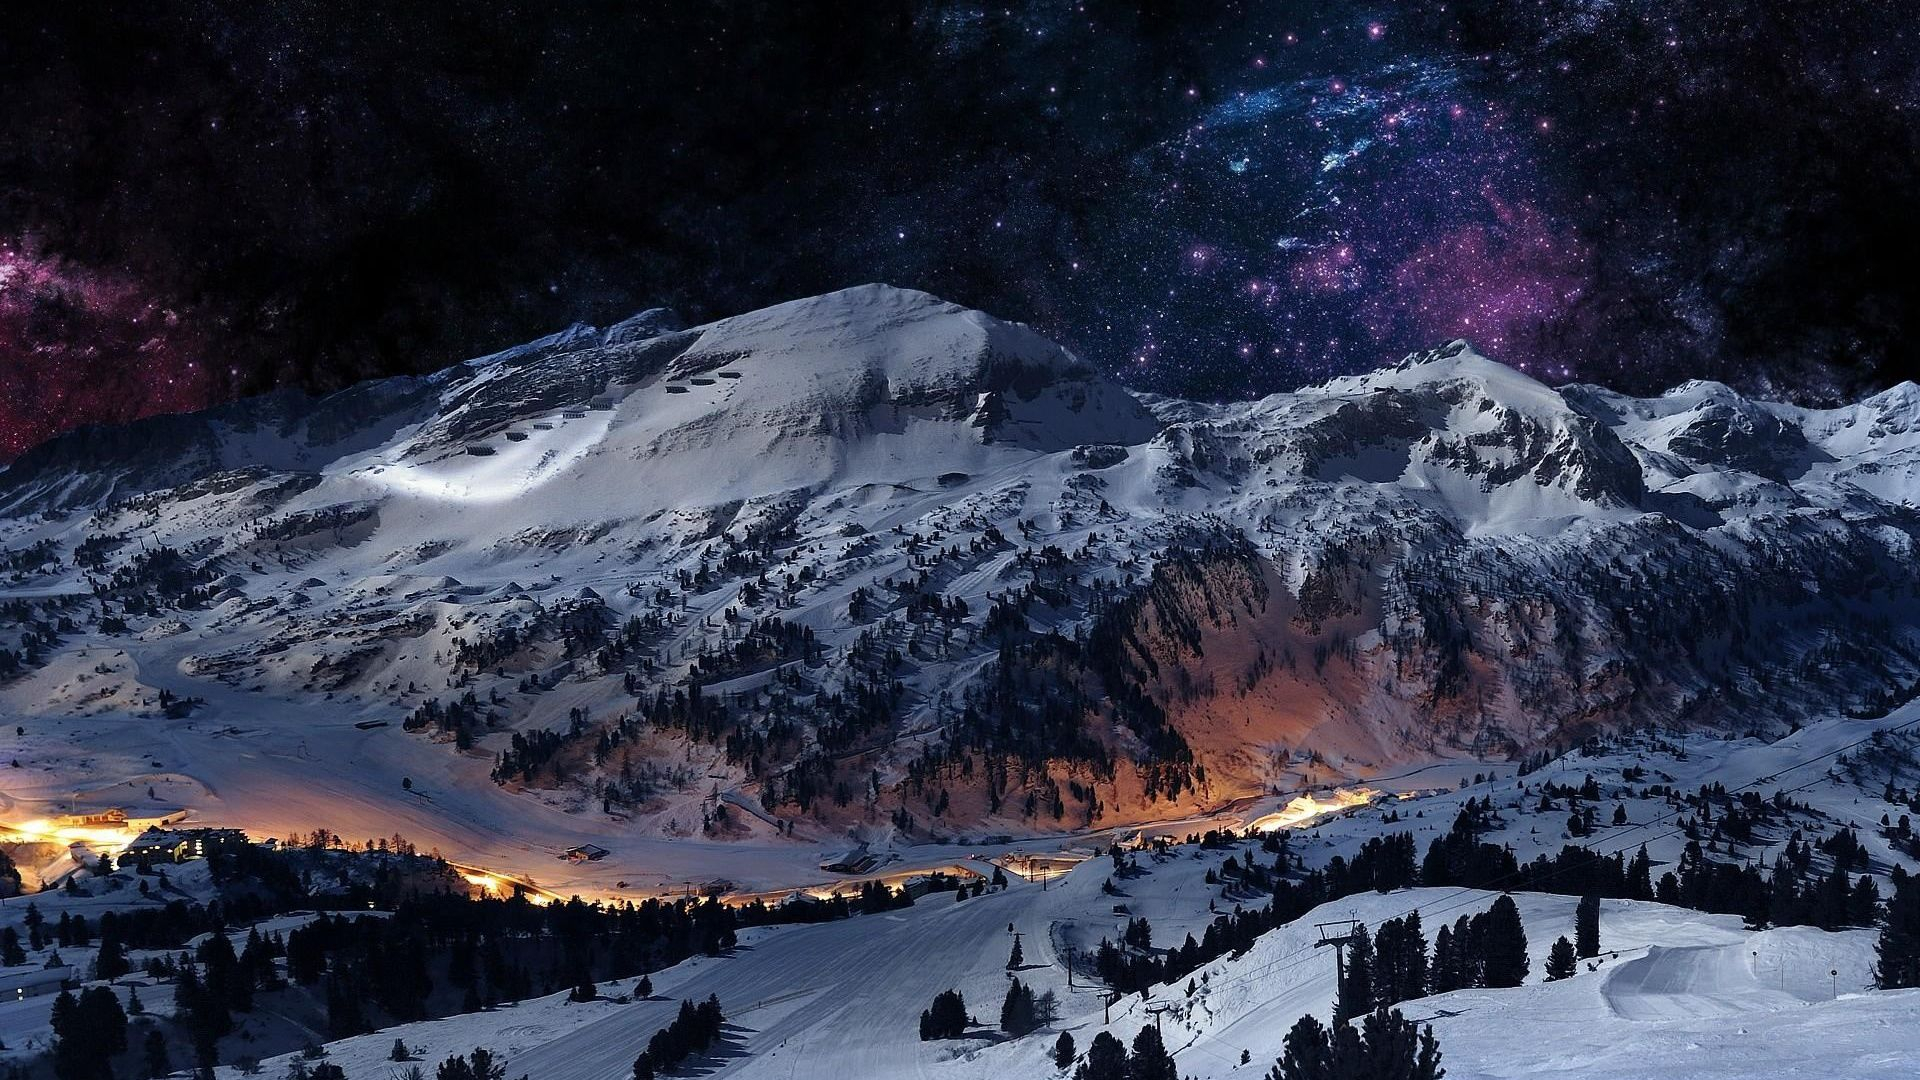 1920x1080 Graceful Winter Mountain Night | Mountains at night, Mountain landscape, Winter wallpaper hd